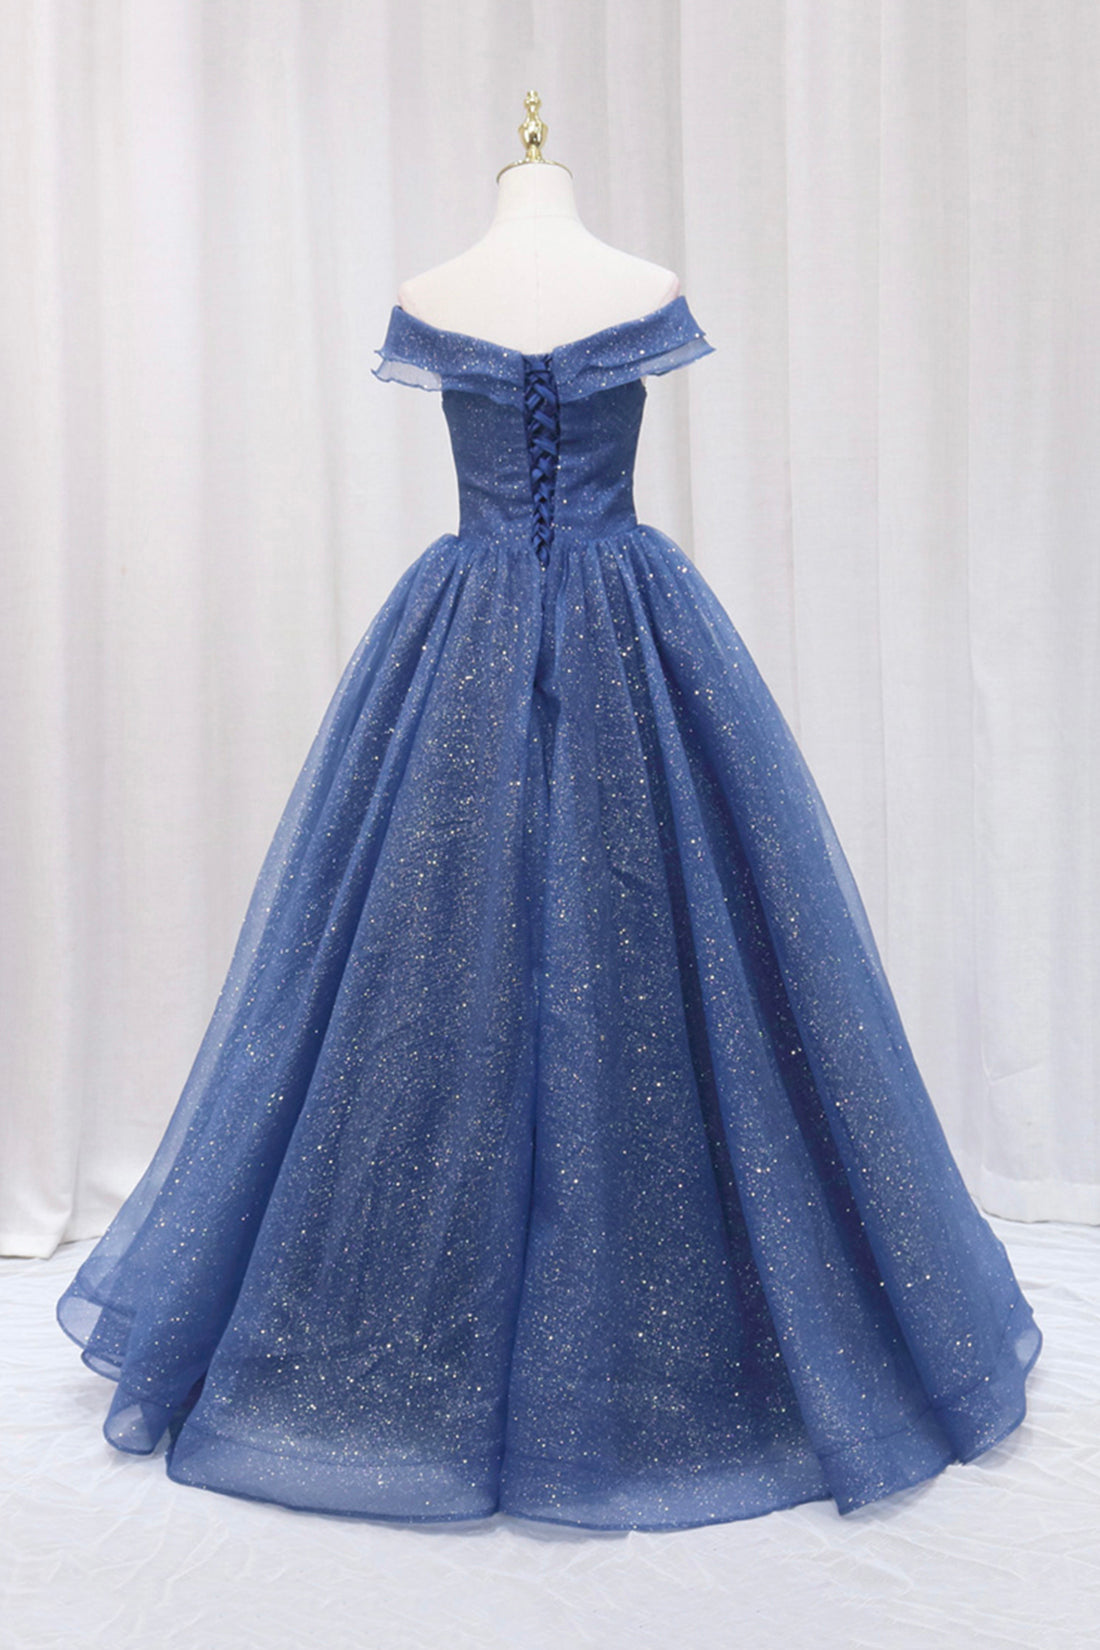 Mafia Dress, Blue Off the Shoulder Long Party Dress Evening Gown, Blue Junior Prom Dress